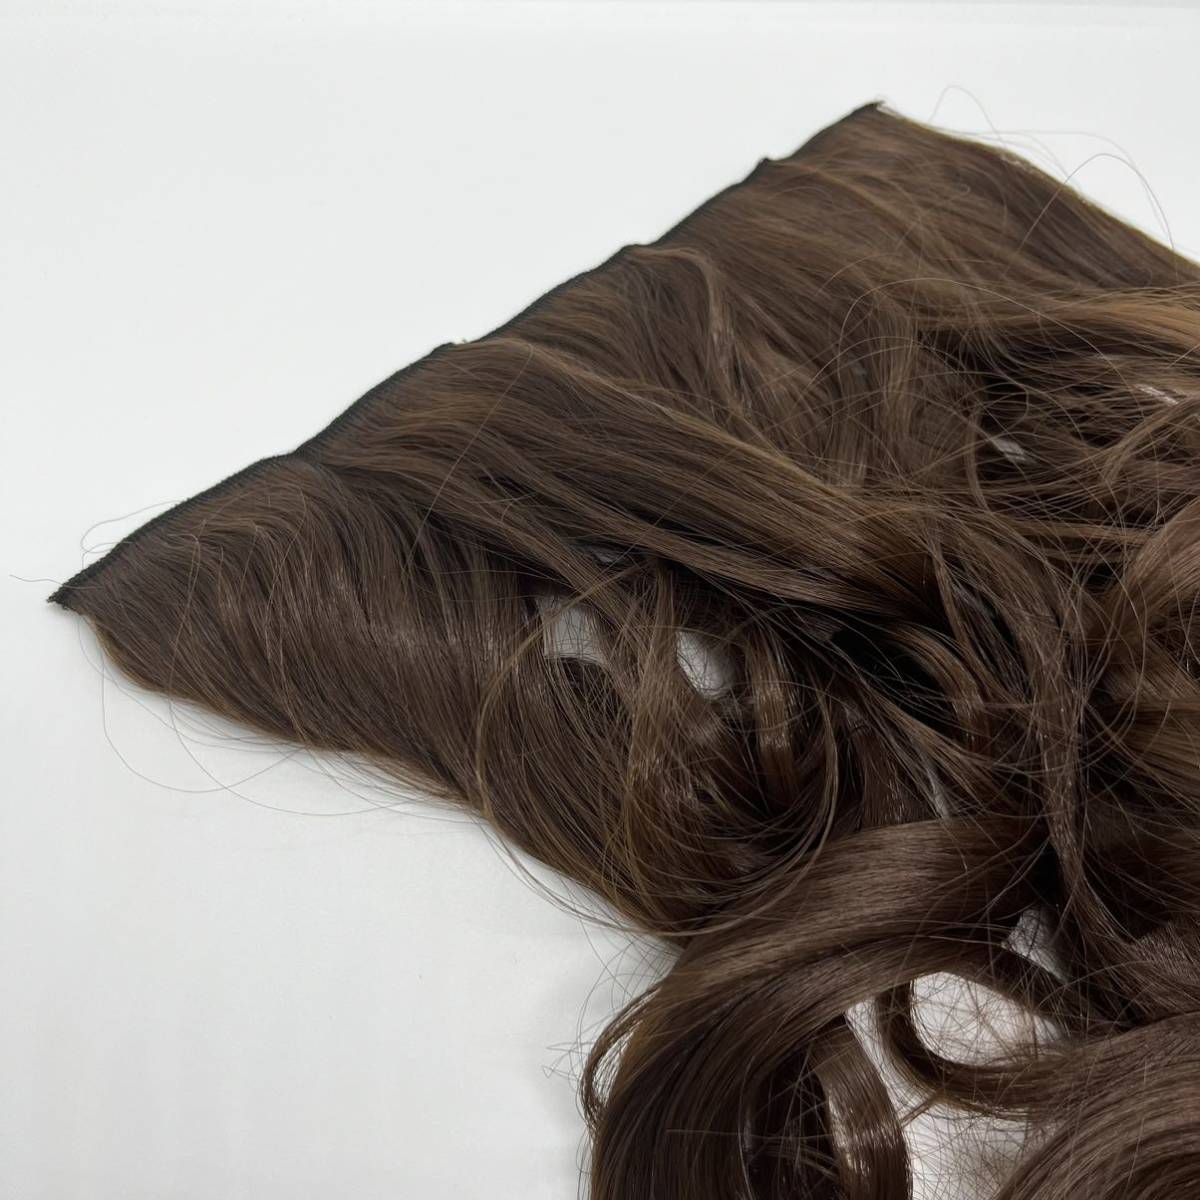 1 jpy auction ek stereo to coil . perm hair - light brown hair extension natural hair clip 60cm wave long wig 